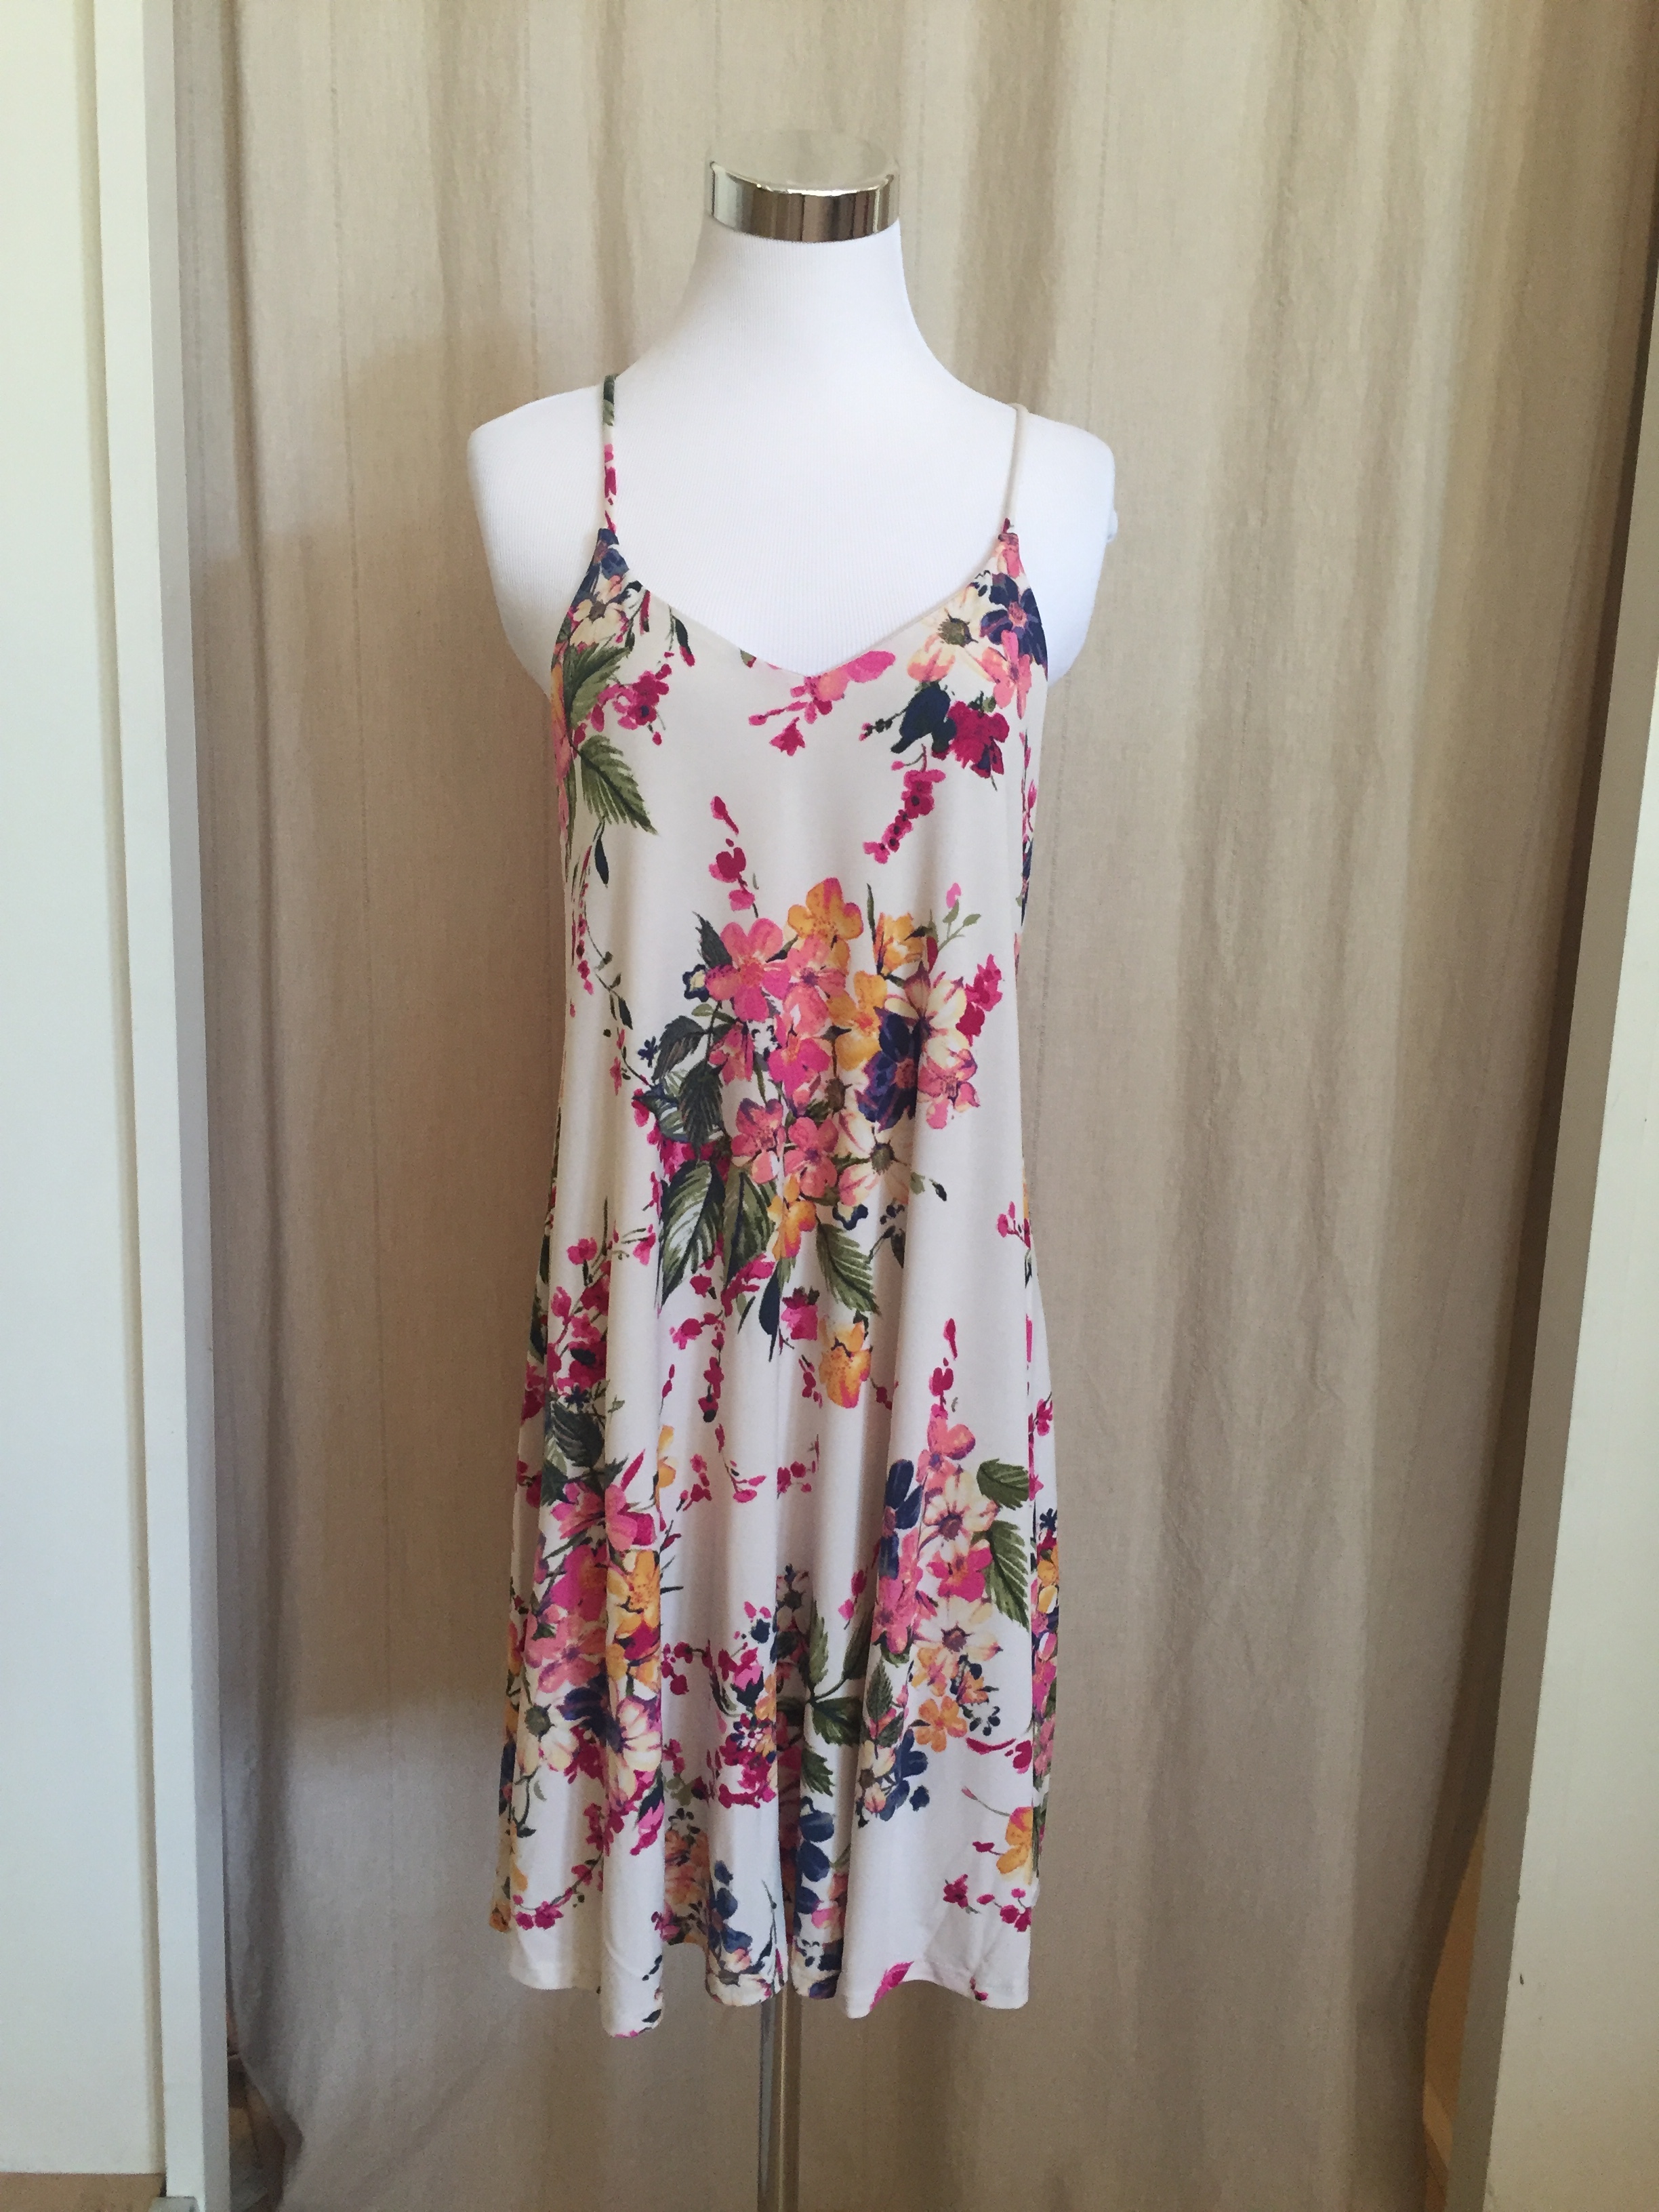 Cream Floral Strappy Dress, $38